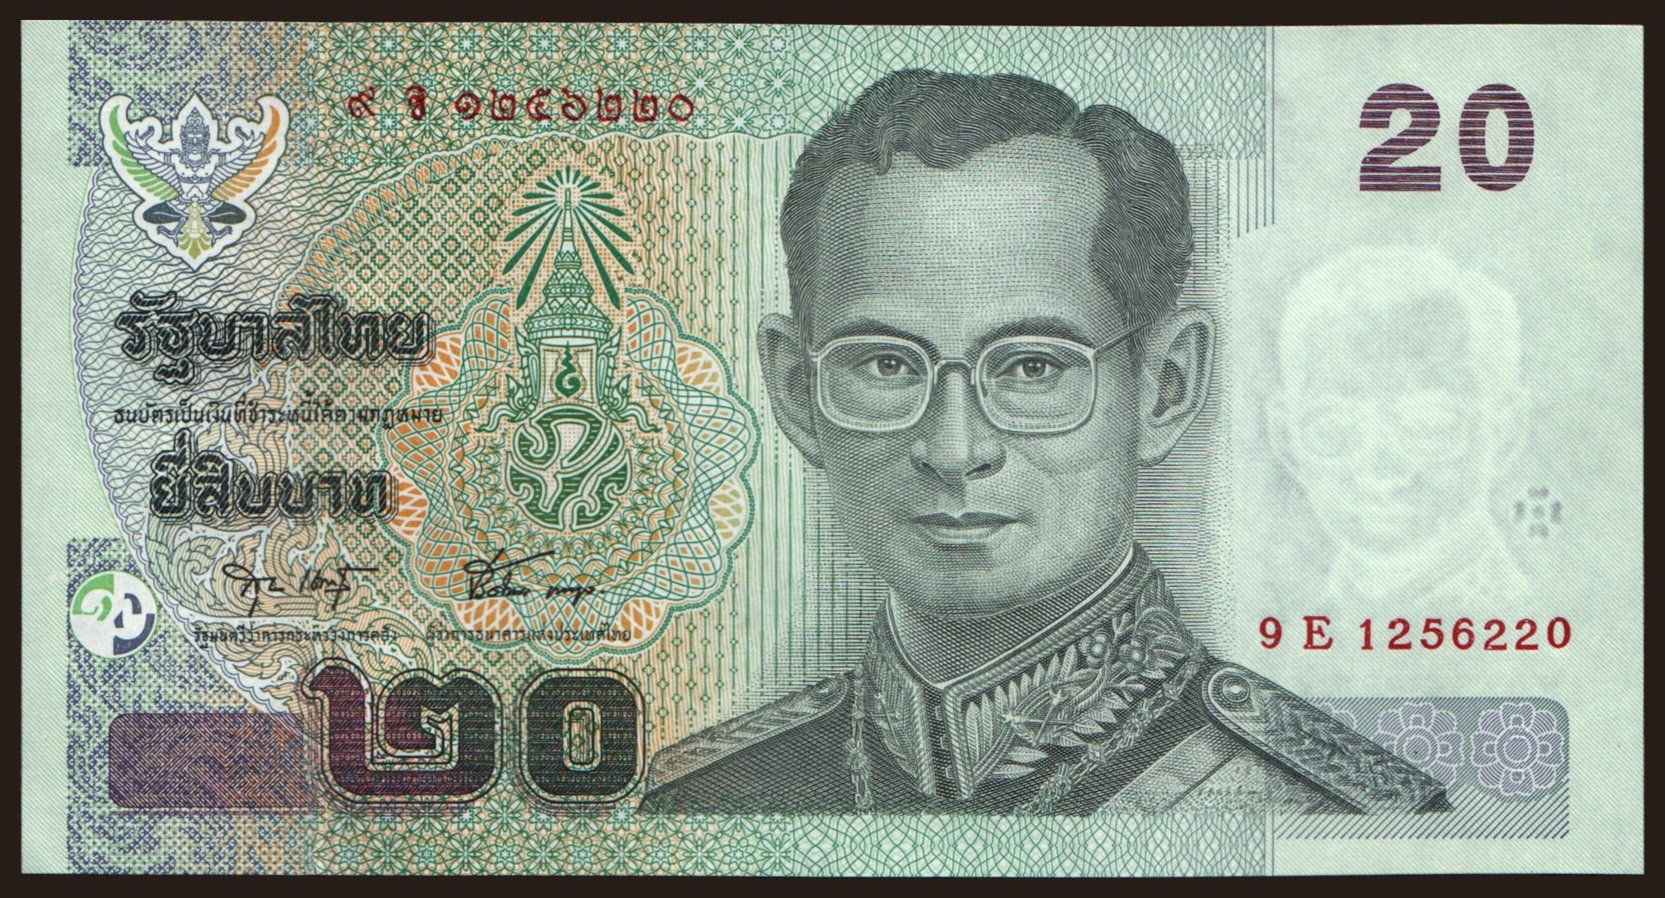 20 baht, 2003